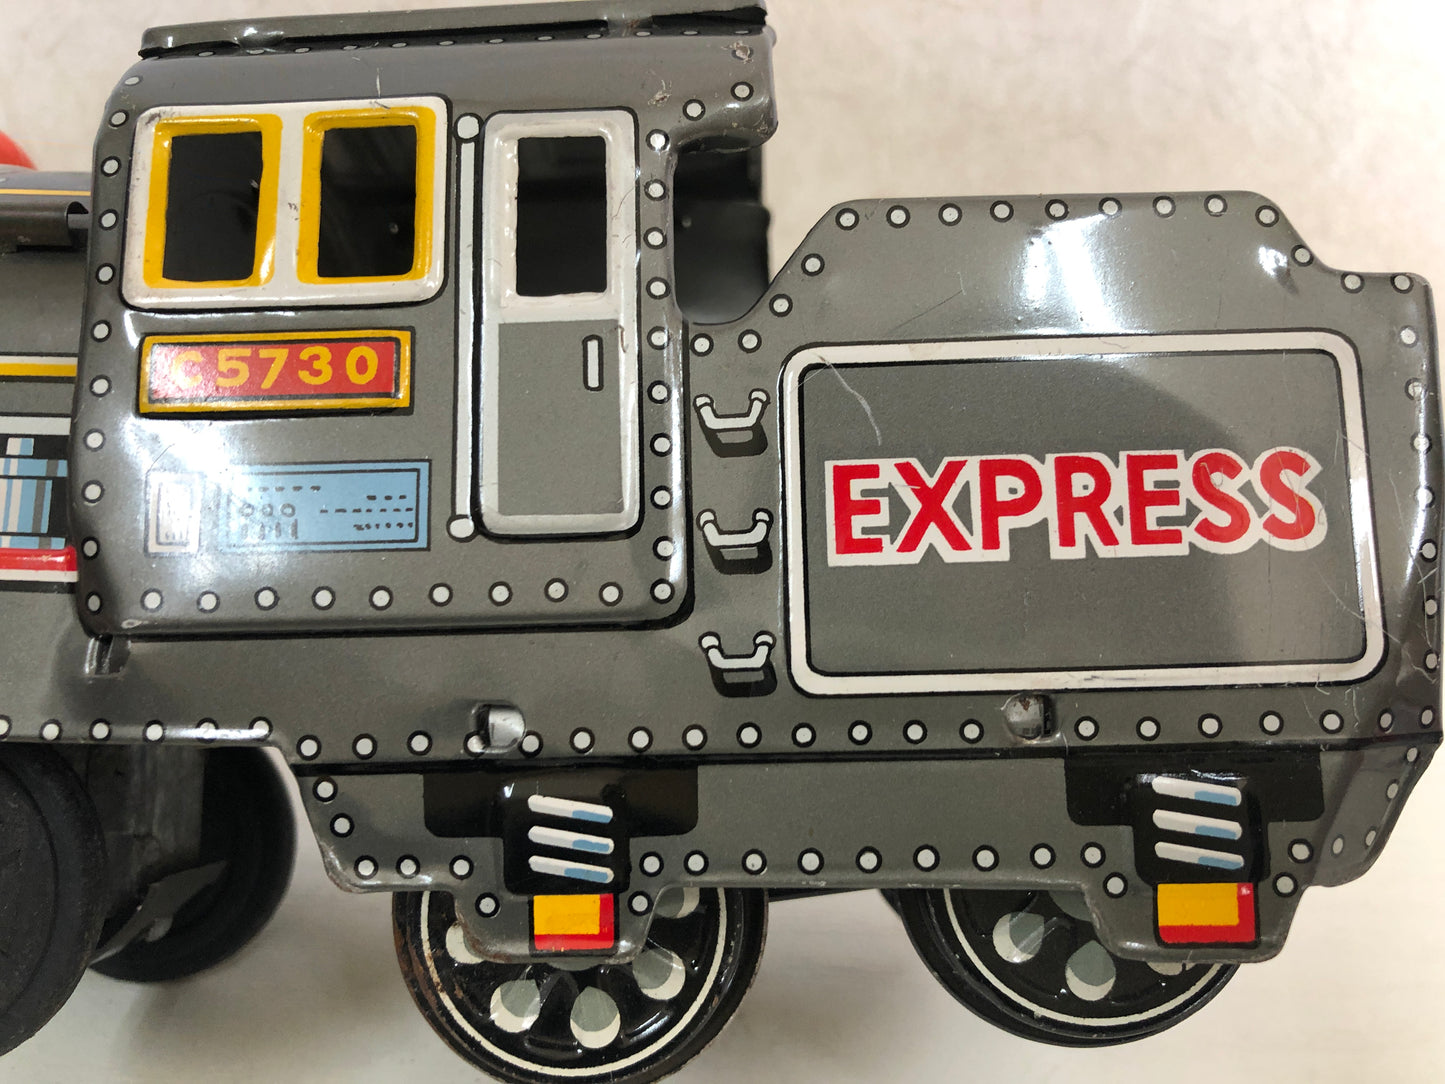 Y4139 TIN TOY Swallows Express Train vehicle railway box Japan antique vintage